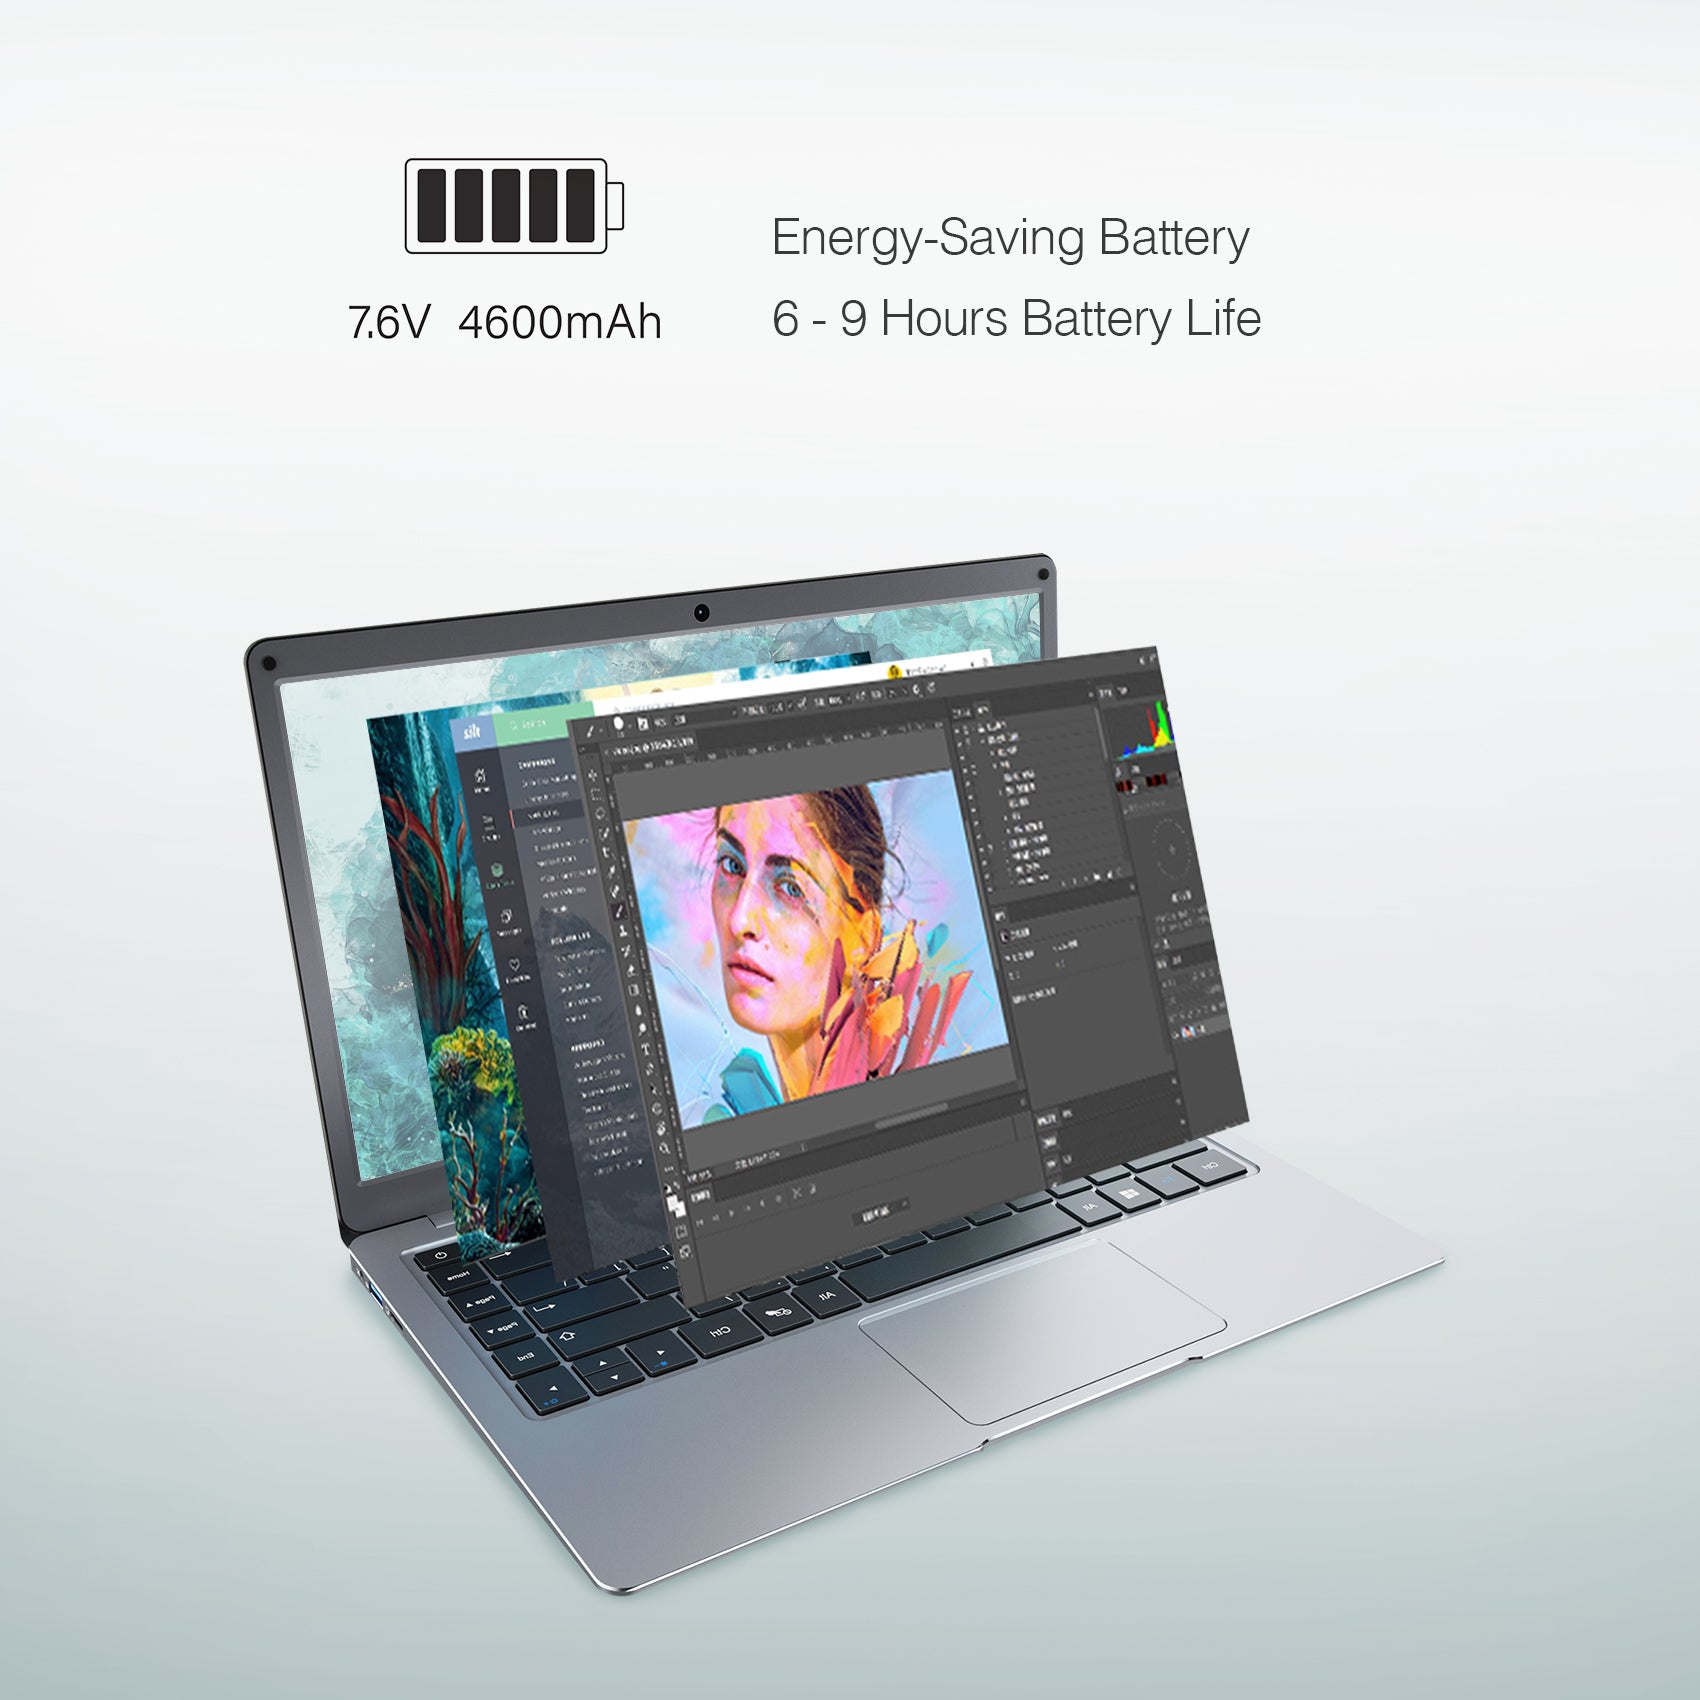 Cavalier ordinateur portable EZbook X3-64G - ismartofficialeu